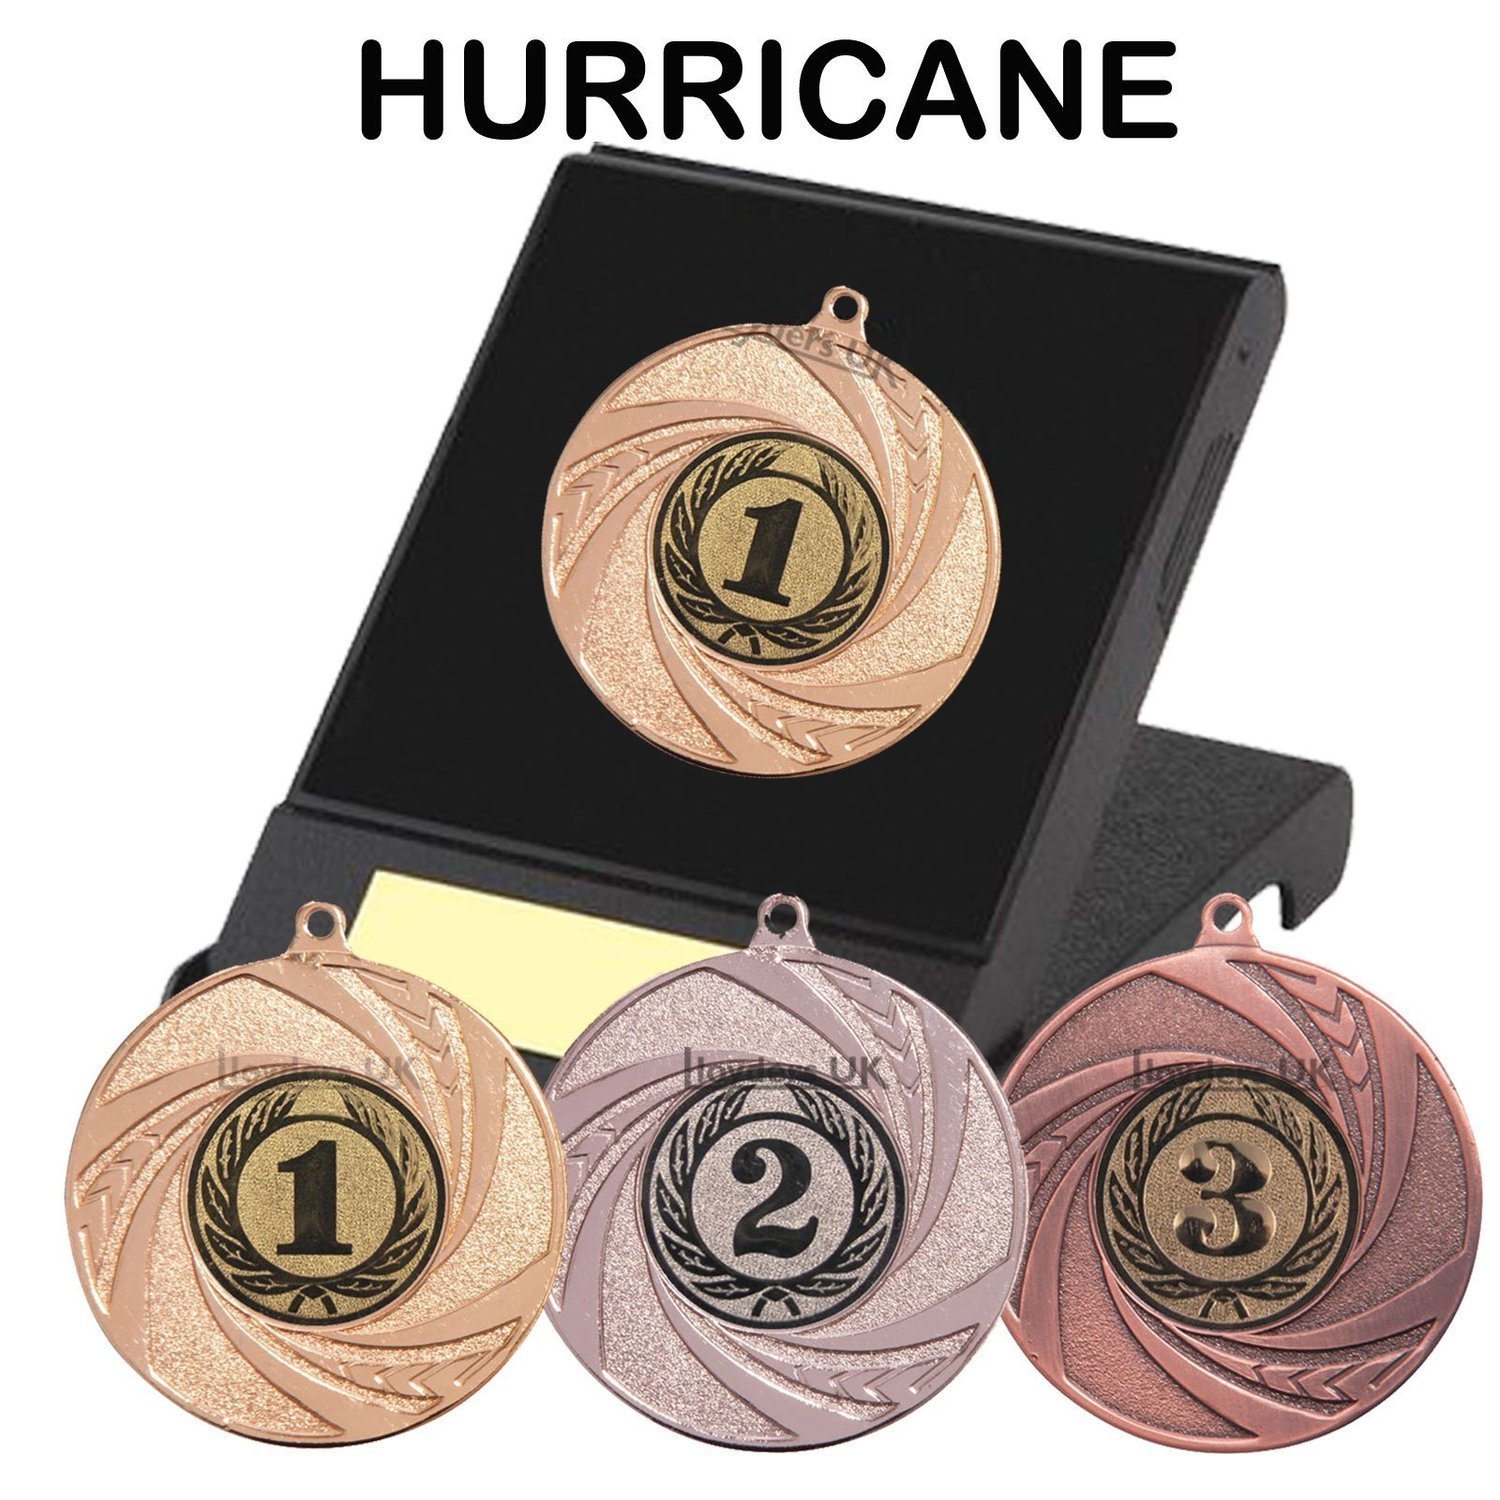 Hurricane Medal in Case